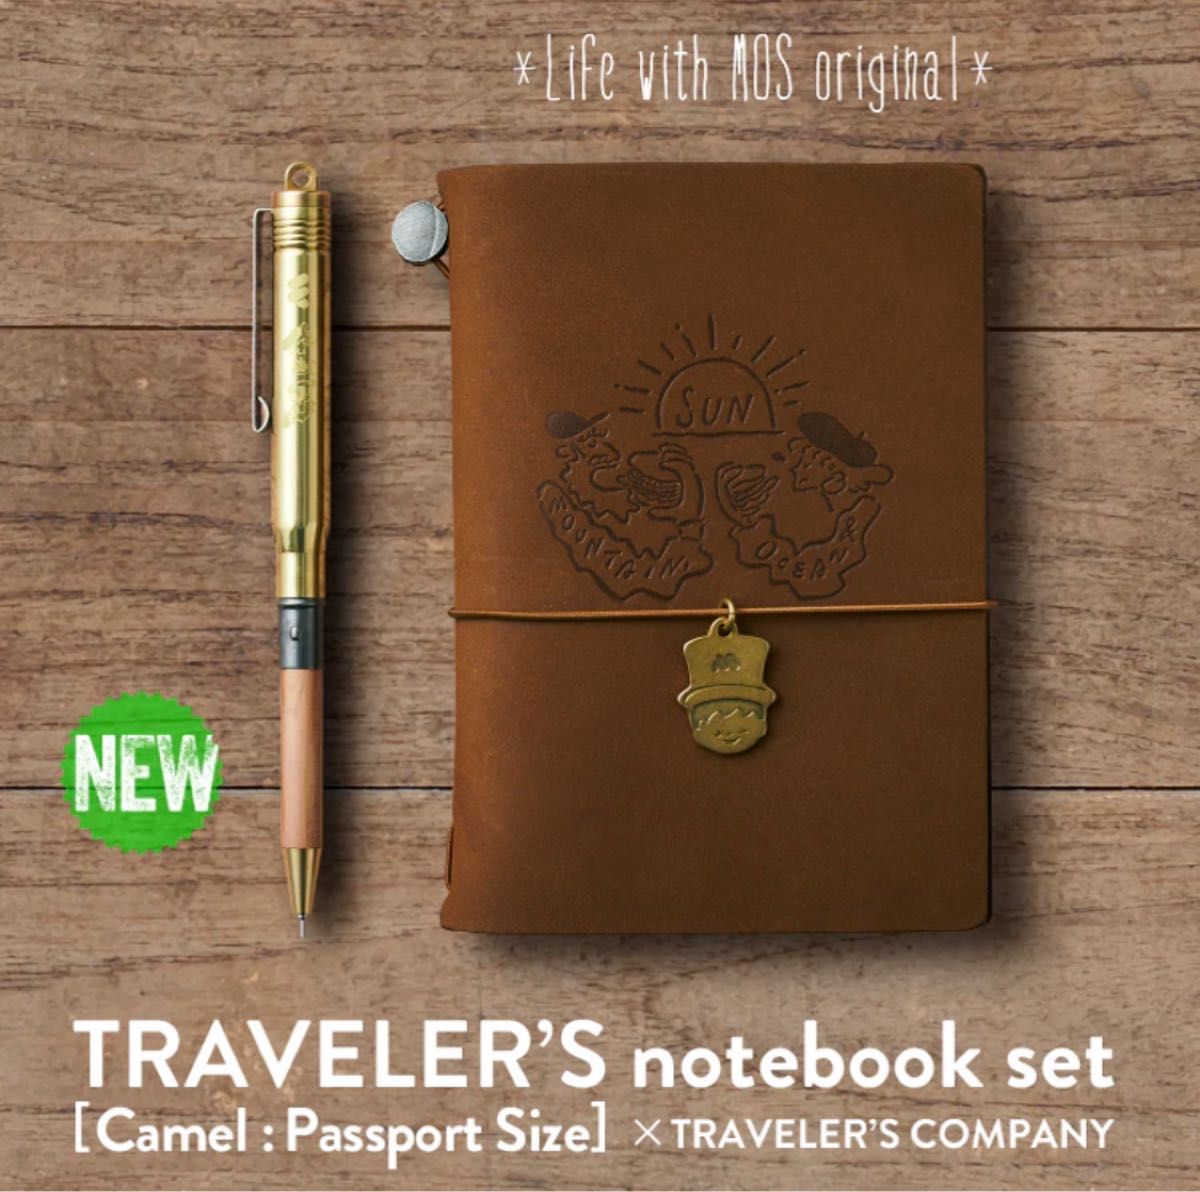 TRAVELER' S notebookモスバーガー50thアニバーサリーセット | labiela.com